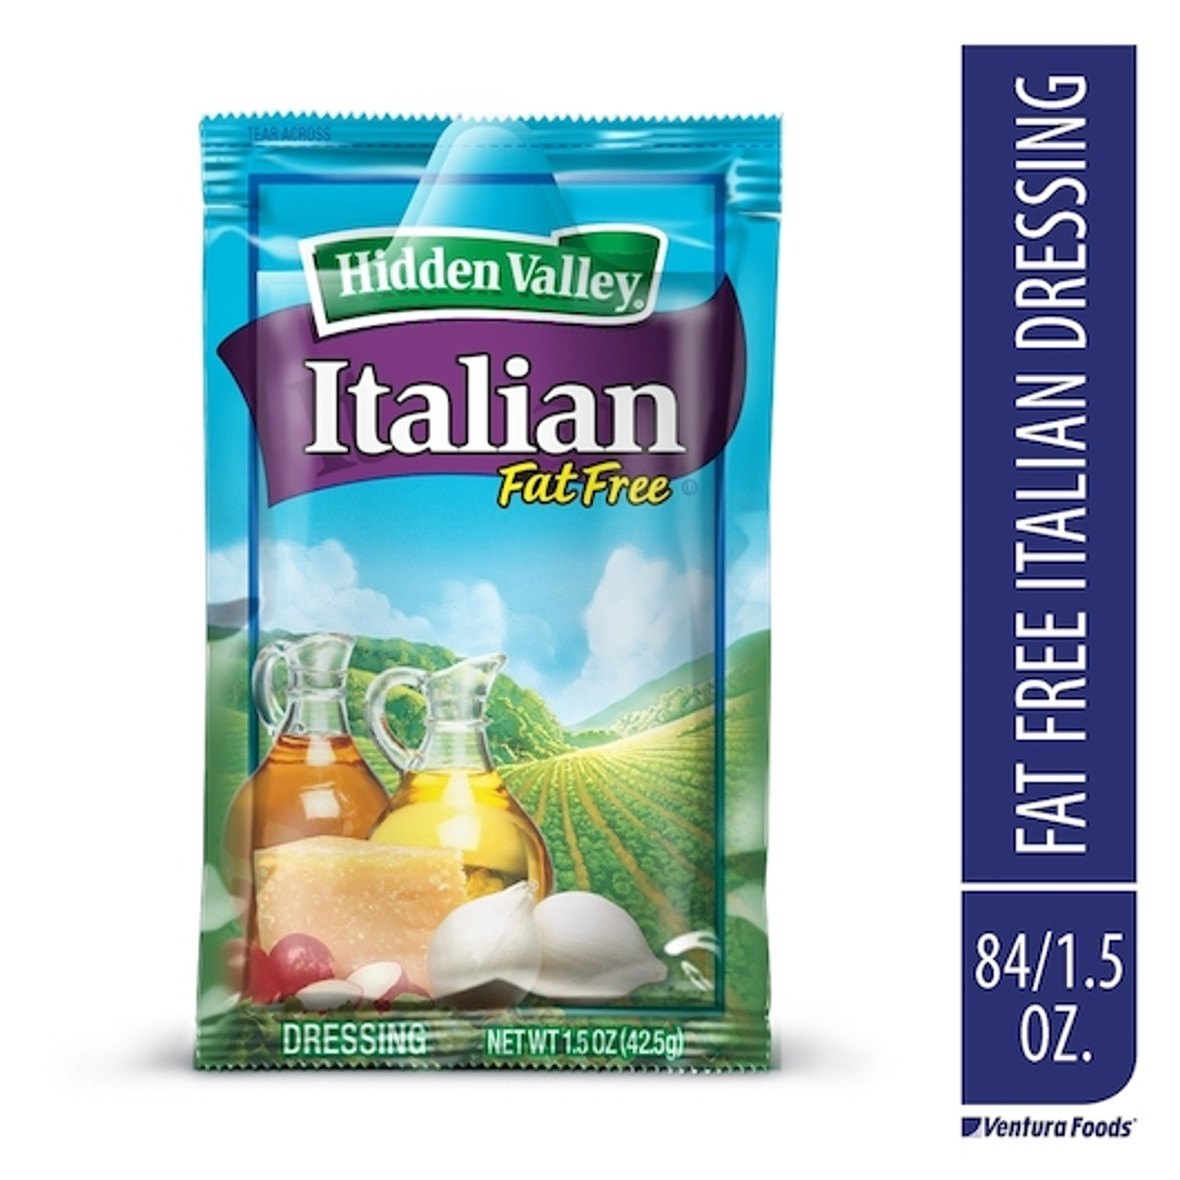 Hidden Valley Fat Free Golden Italian Dressing Single Serve, 1.5 Ounce, 84 Per Case